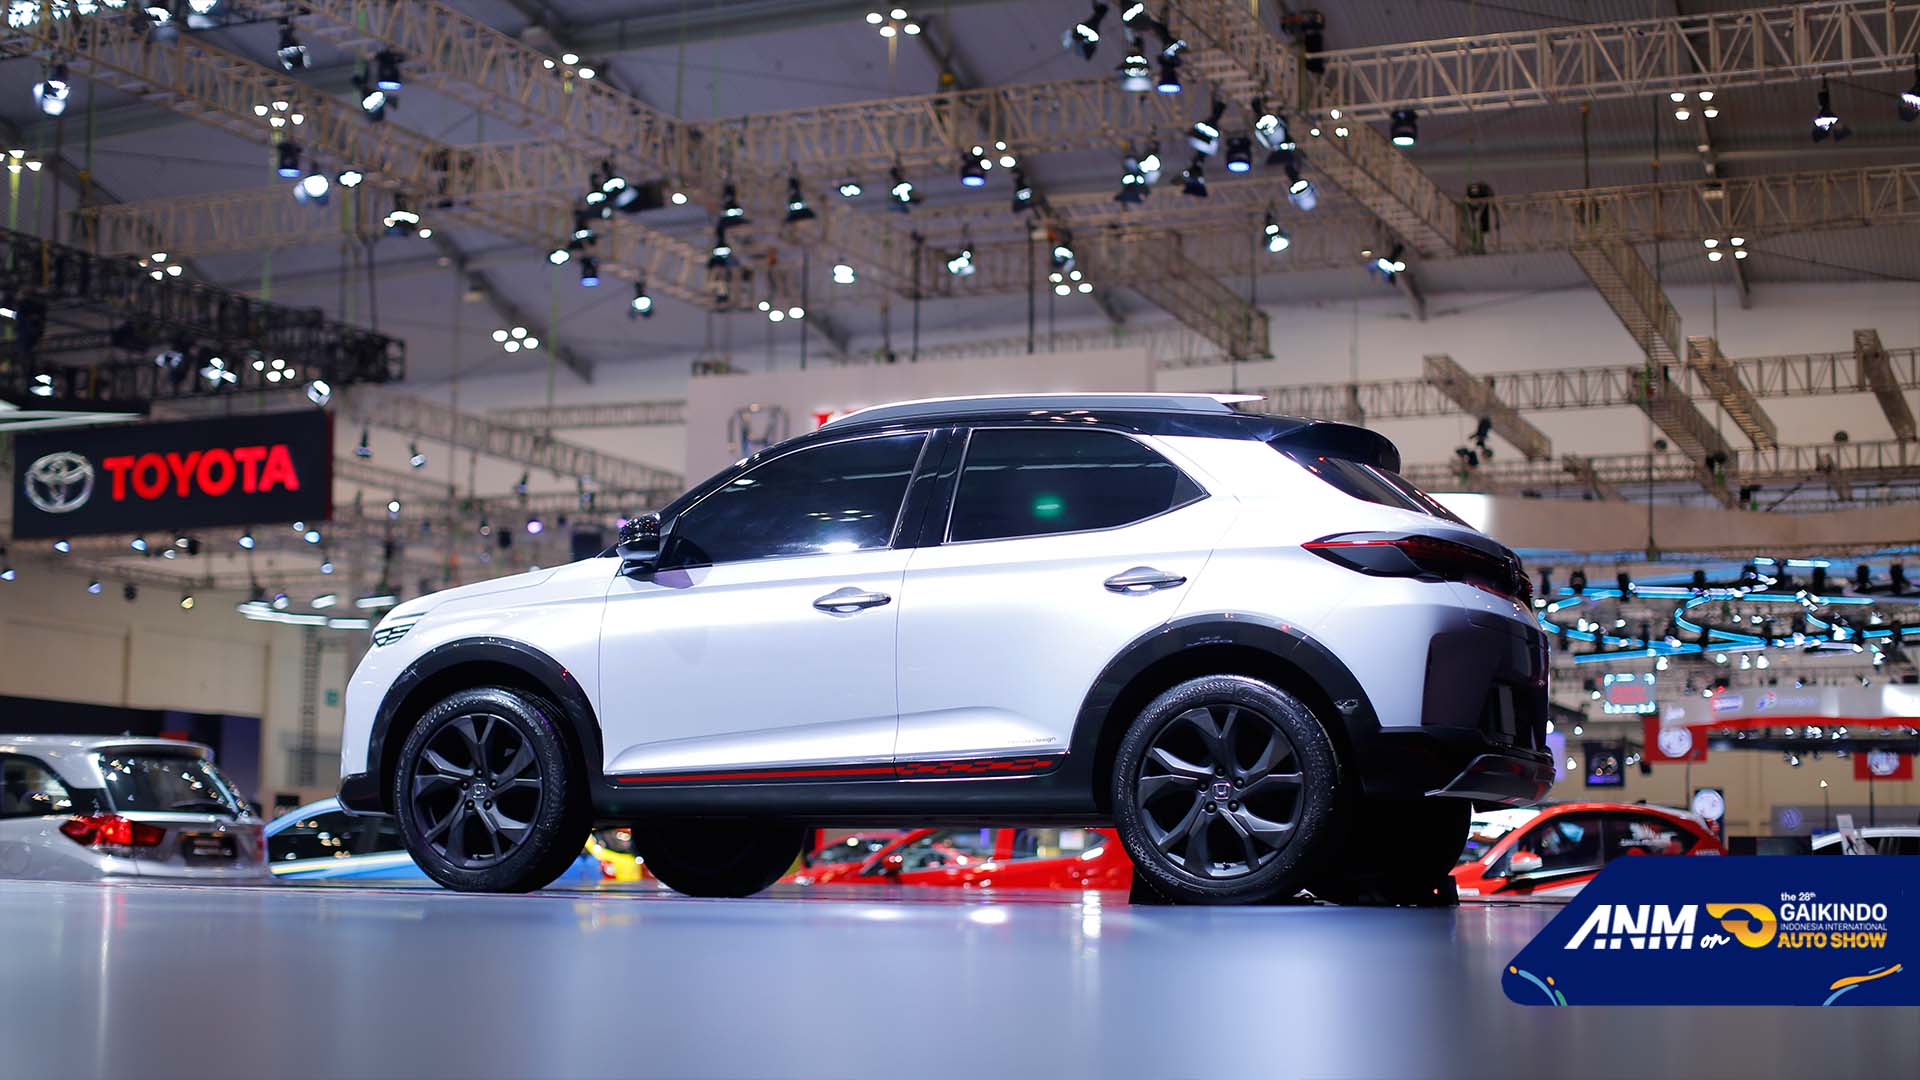 Berita, Foto foto Honda SUV RS Concept: GIIAS 2021 : Foto Lengkap Honda SUV RS Concept, Emang Ganteng!